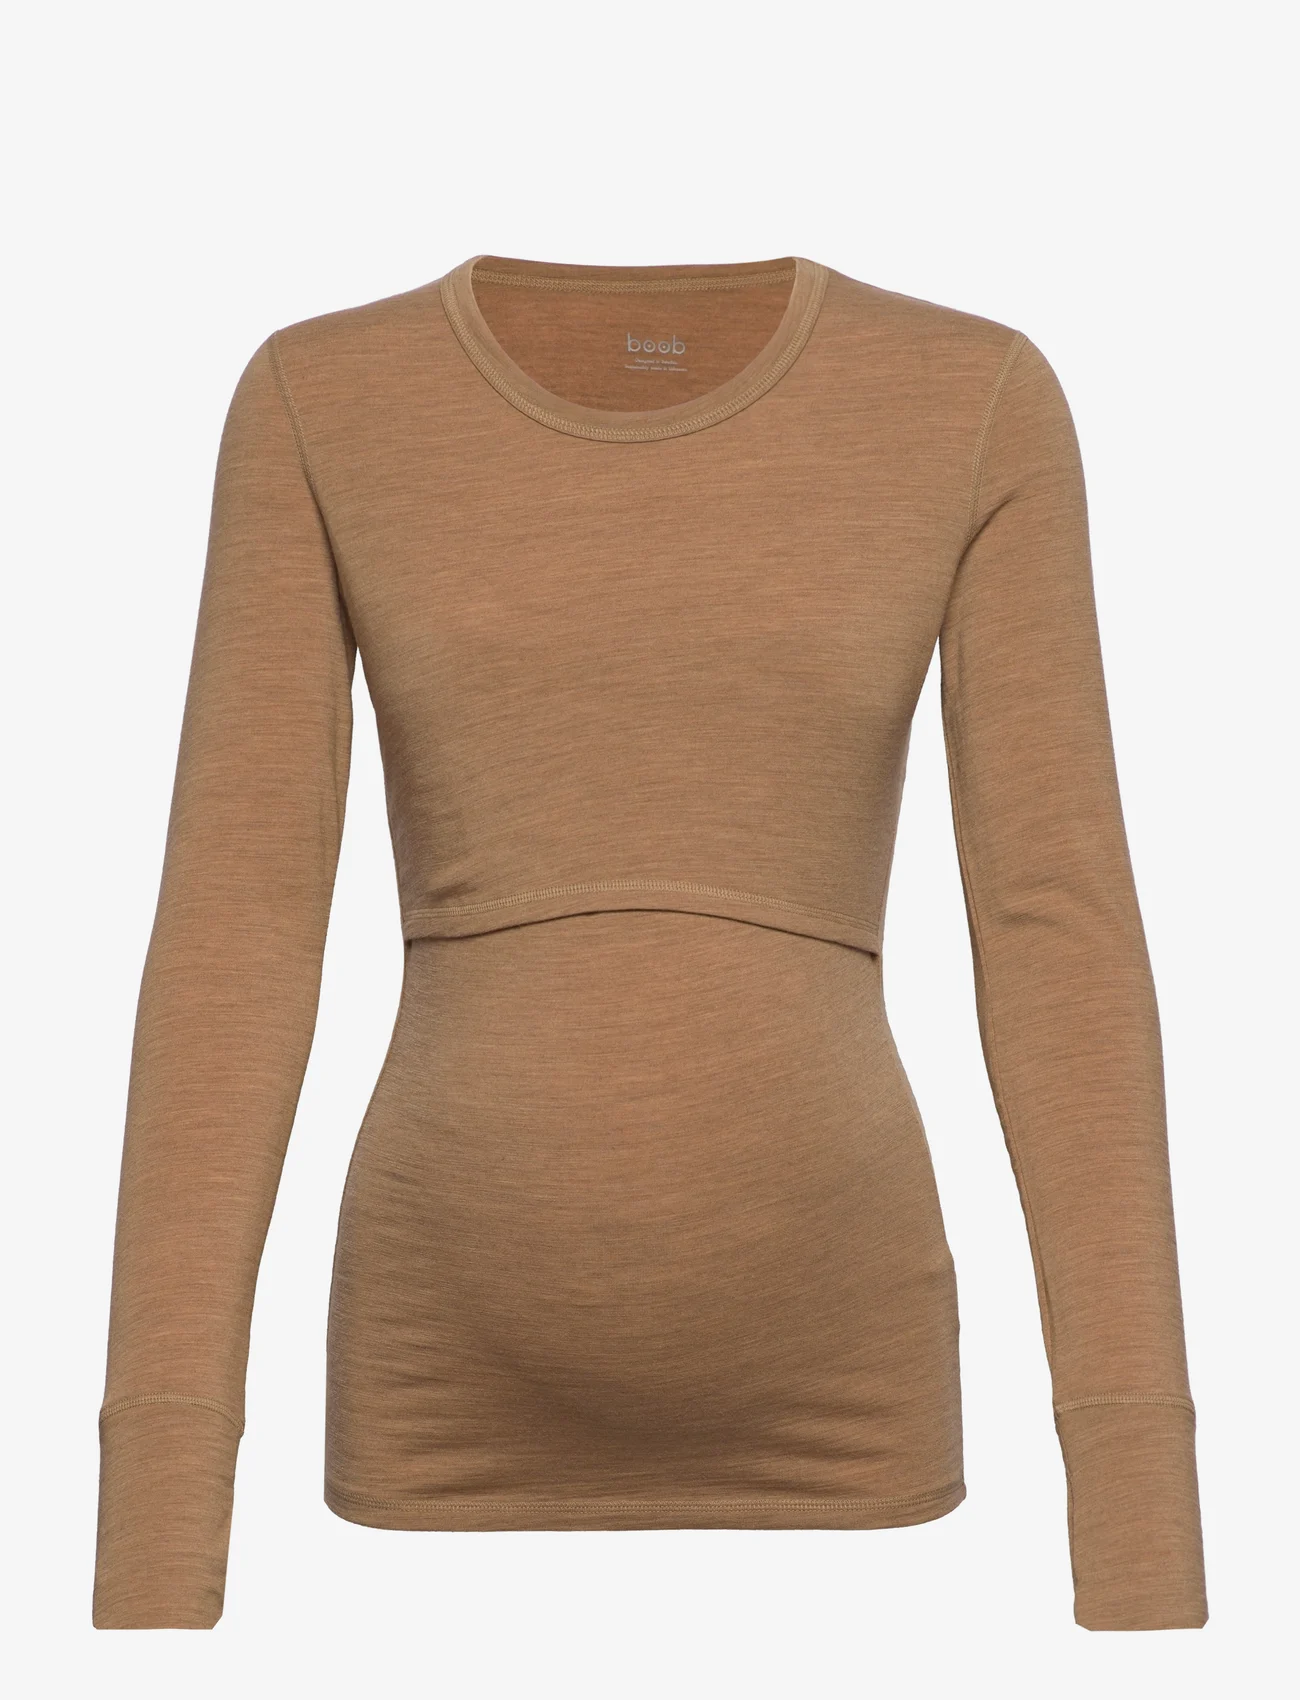 Boob - Merino wool l/s top - t-shirts & tops - brown melange - 0